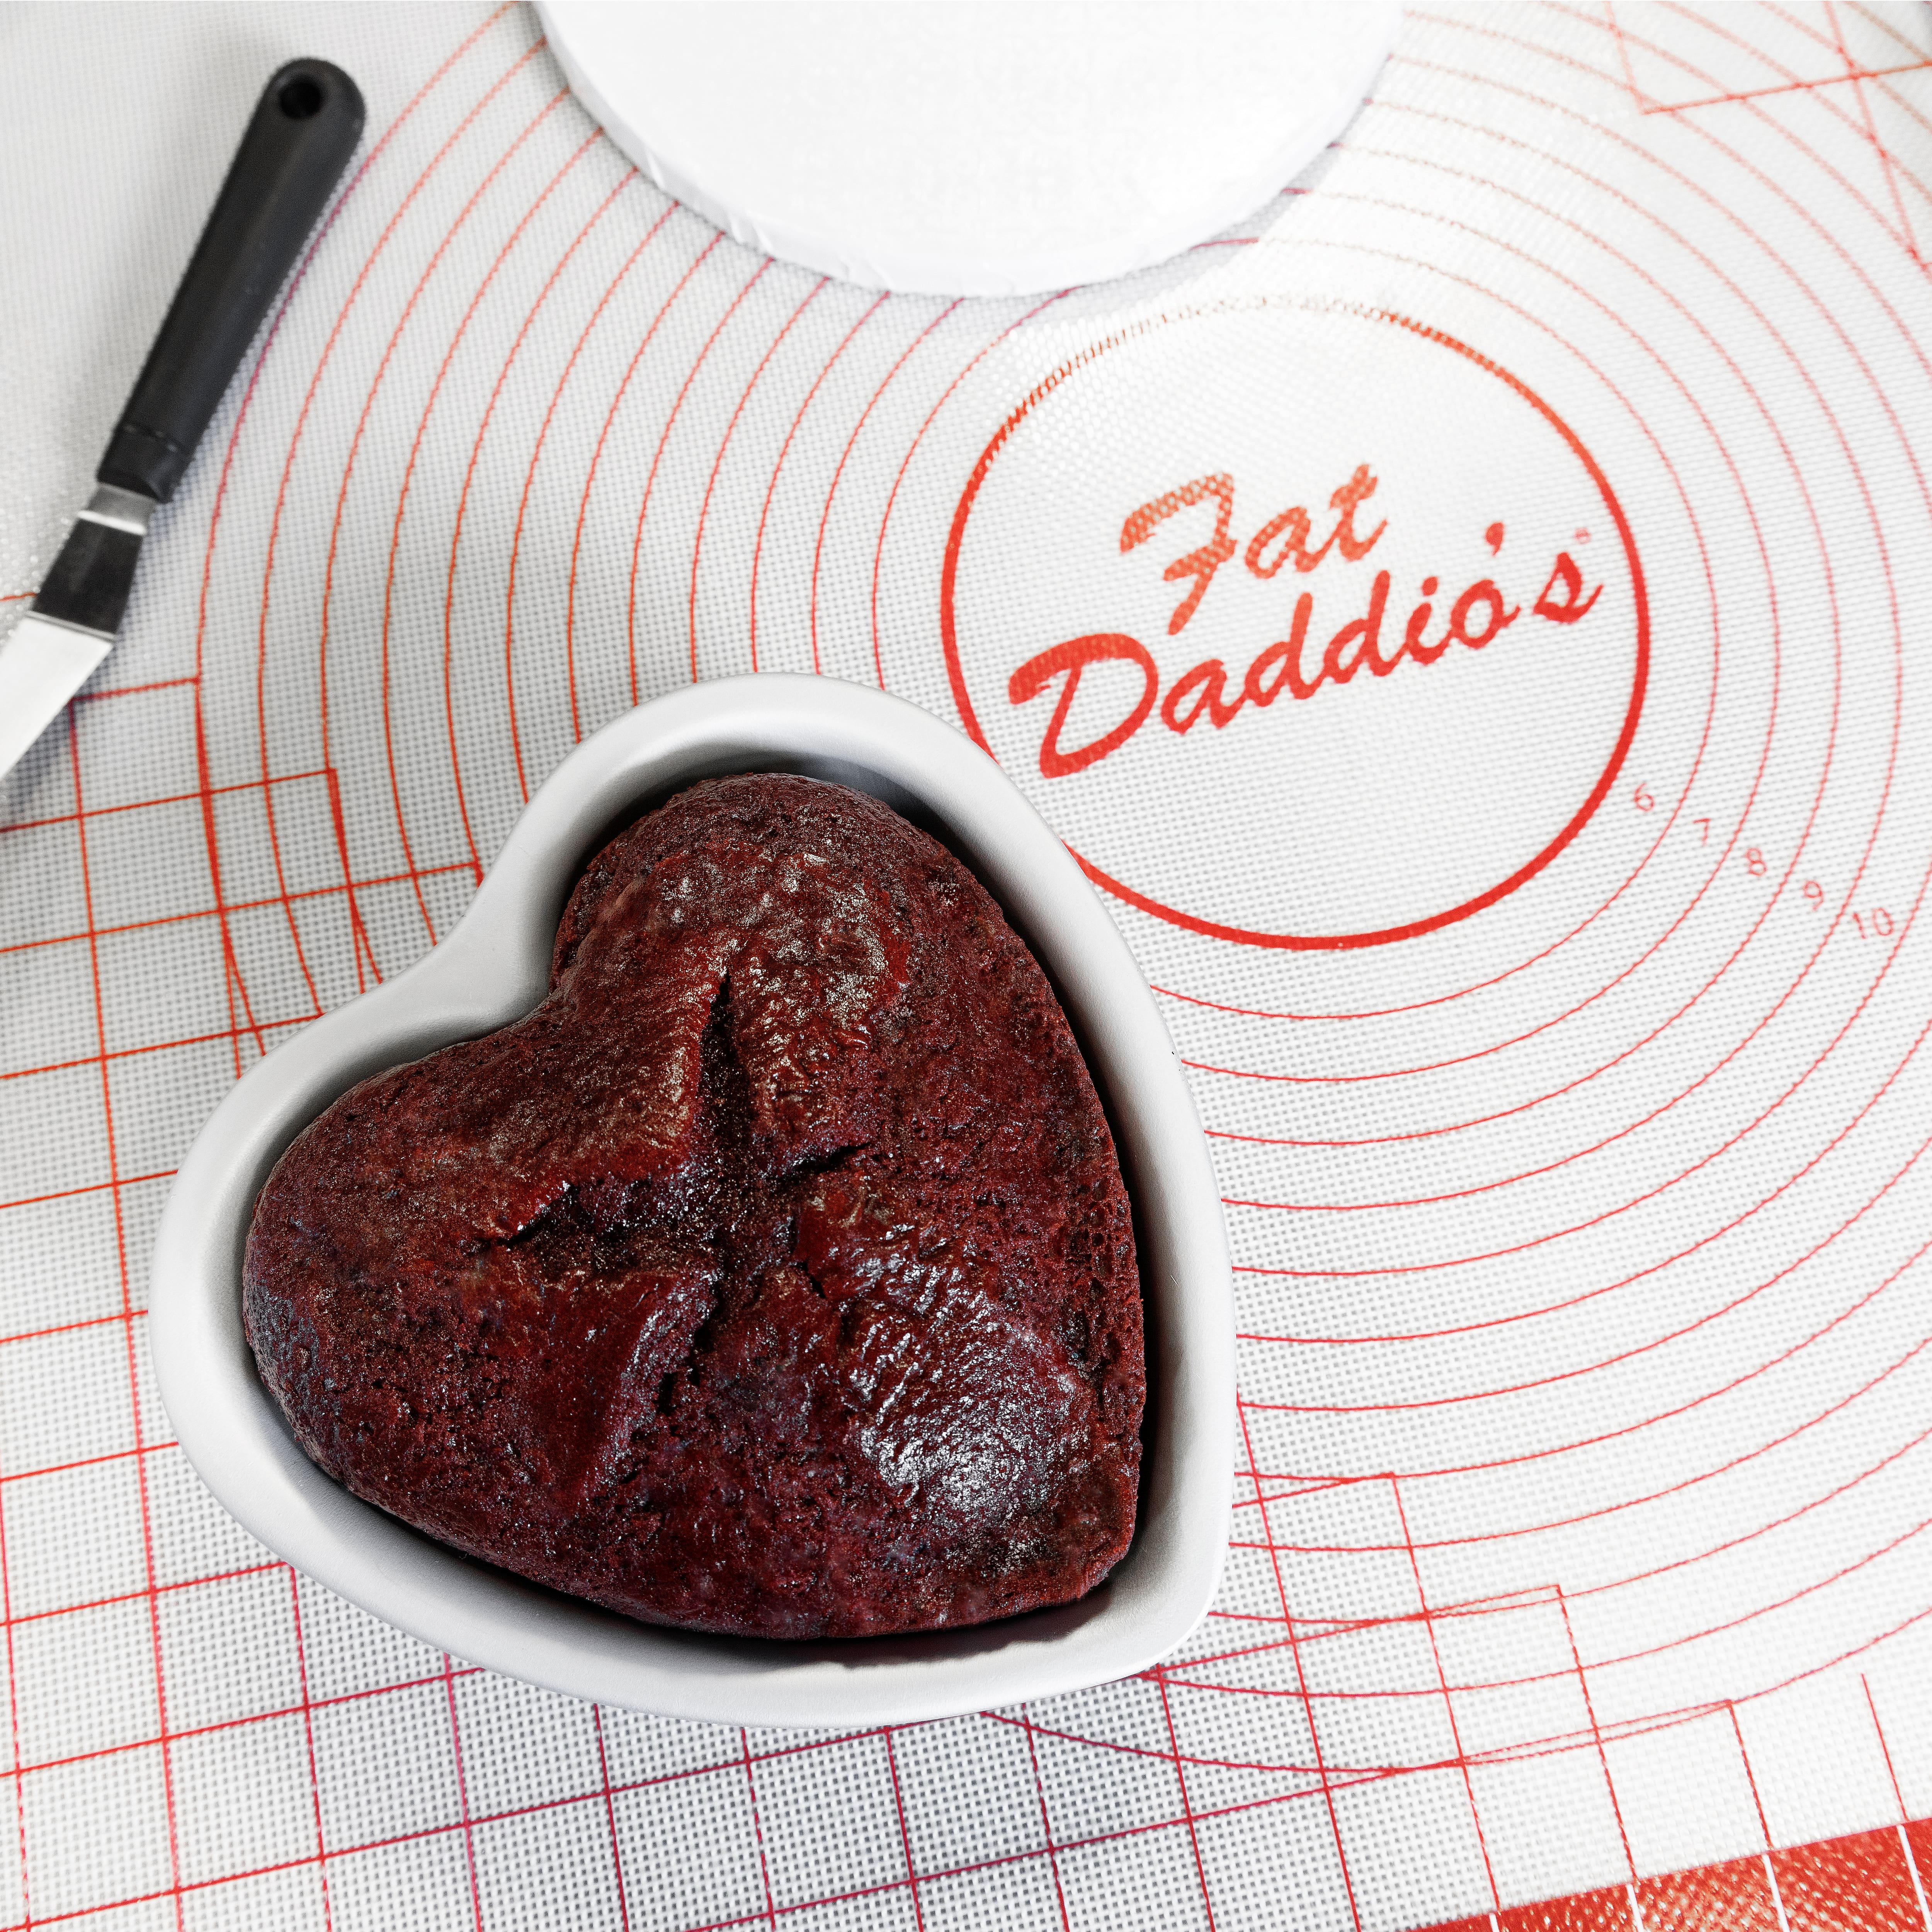 Fat Daddio's Anodized Aluminum Heart Cake Pan, 8 inch x 3 inch